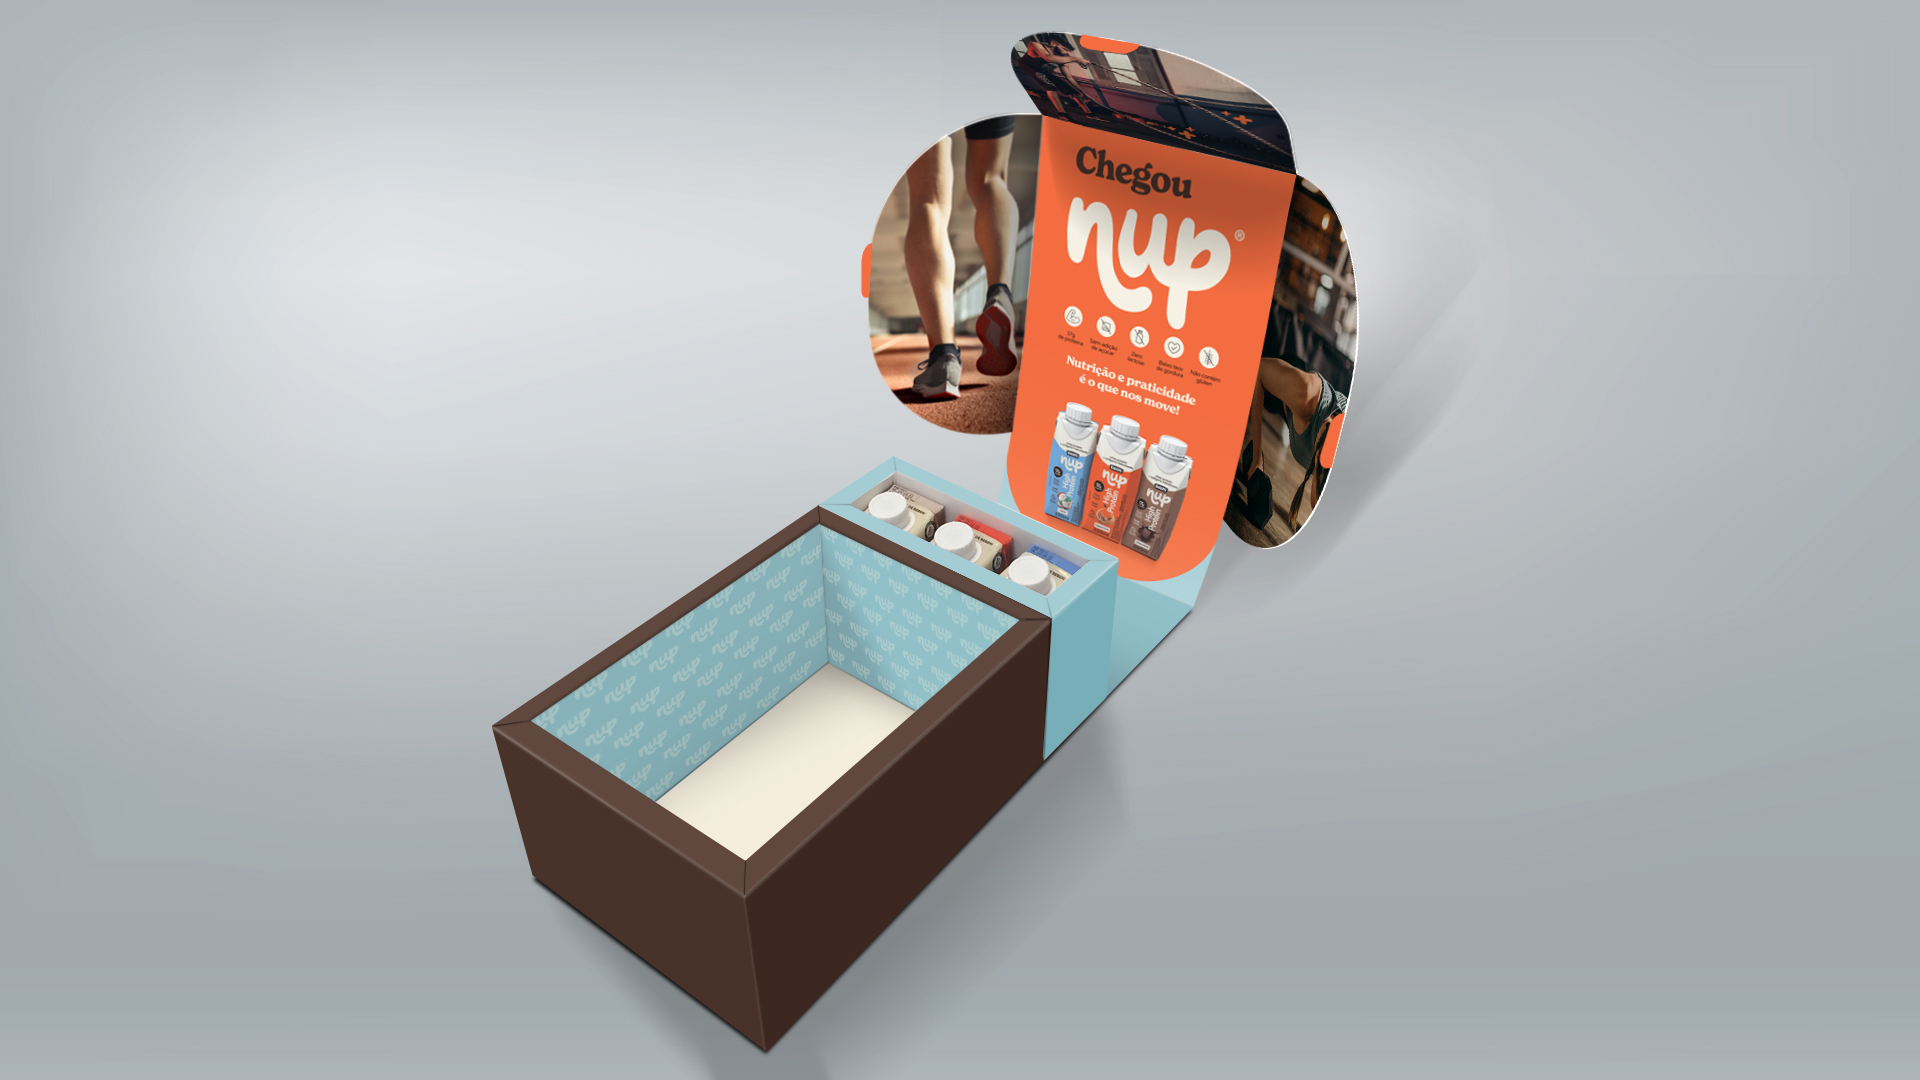 Imagem do sales kit de lançamento NUP.